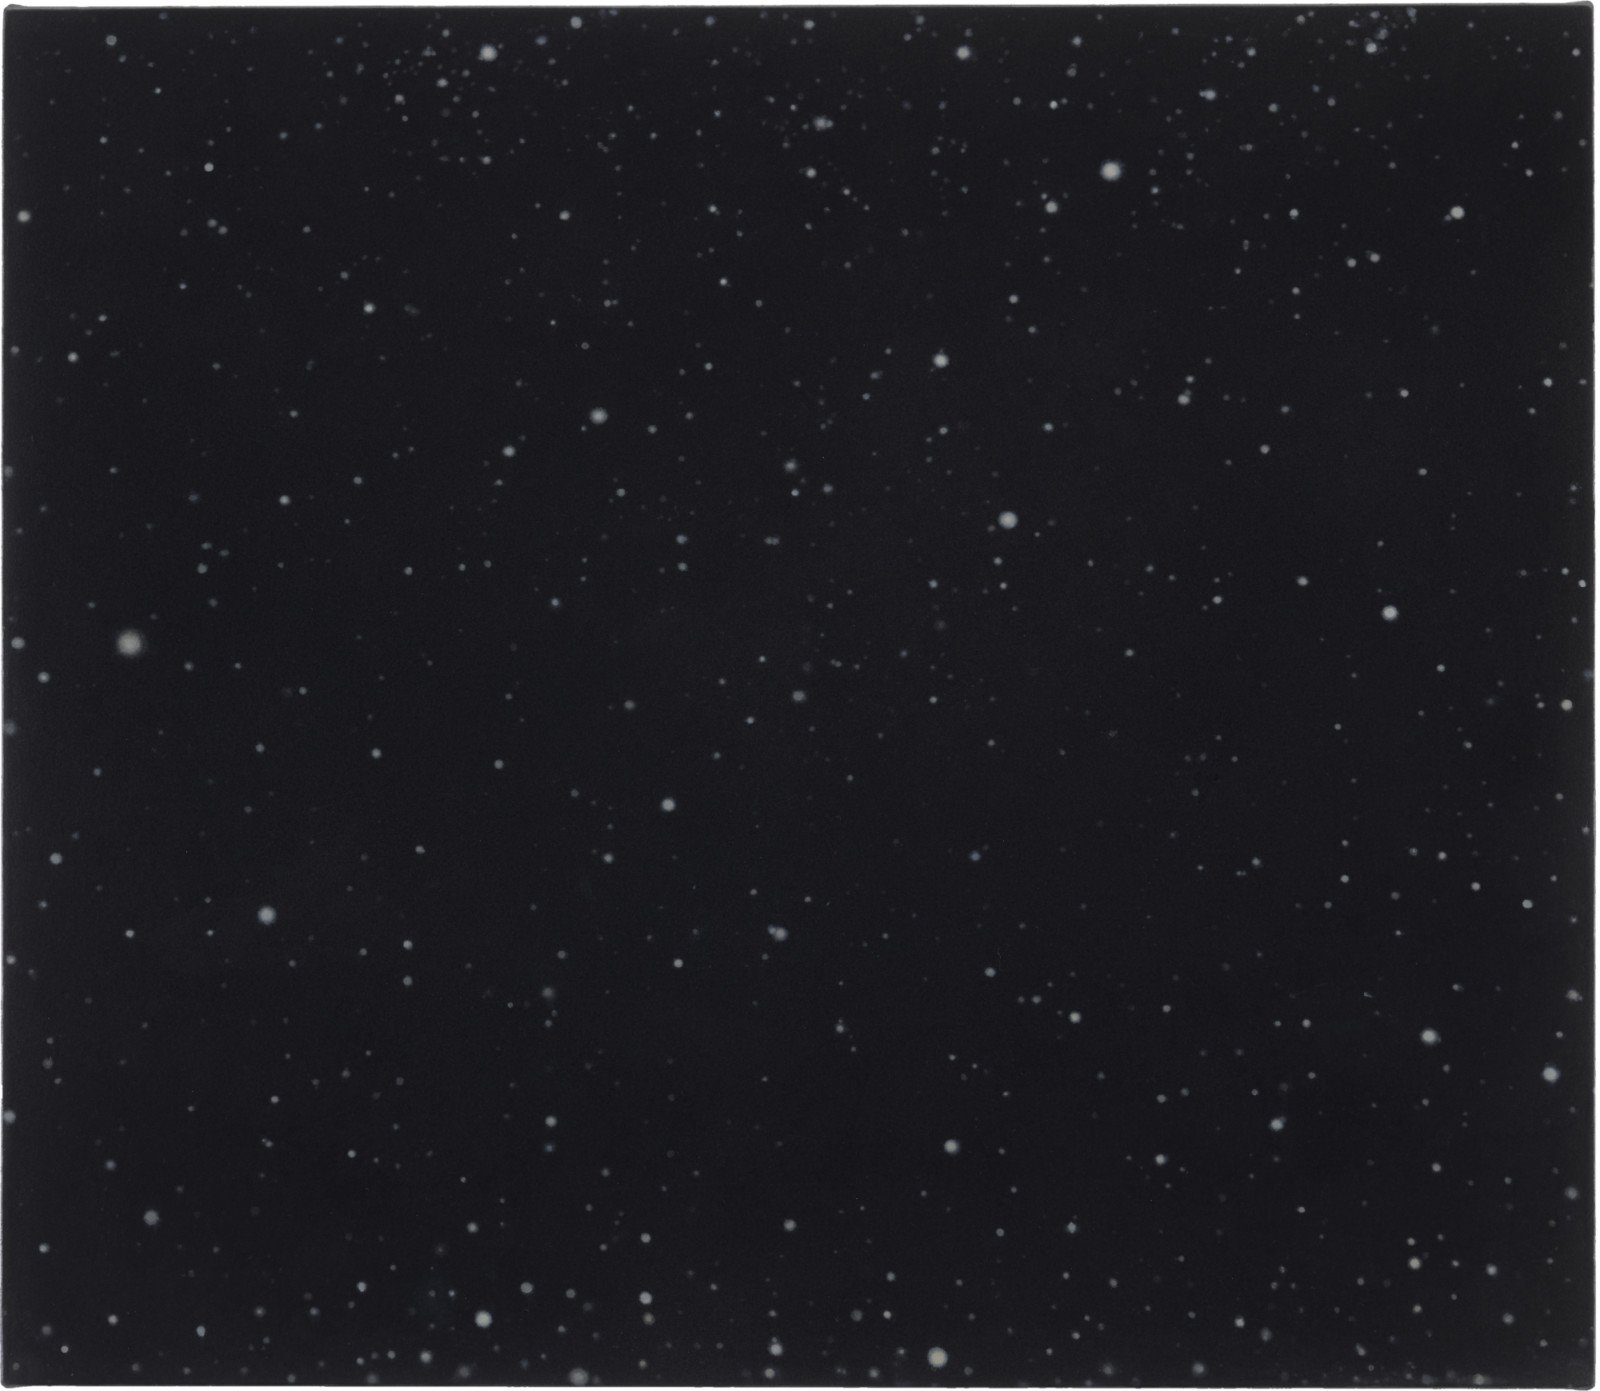 Vija Celmins, Night Sky #22, 2015-18.  Oil on canvas, 50.2 x 57.2cm. 